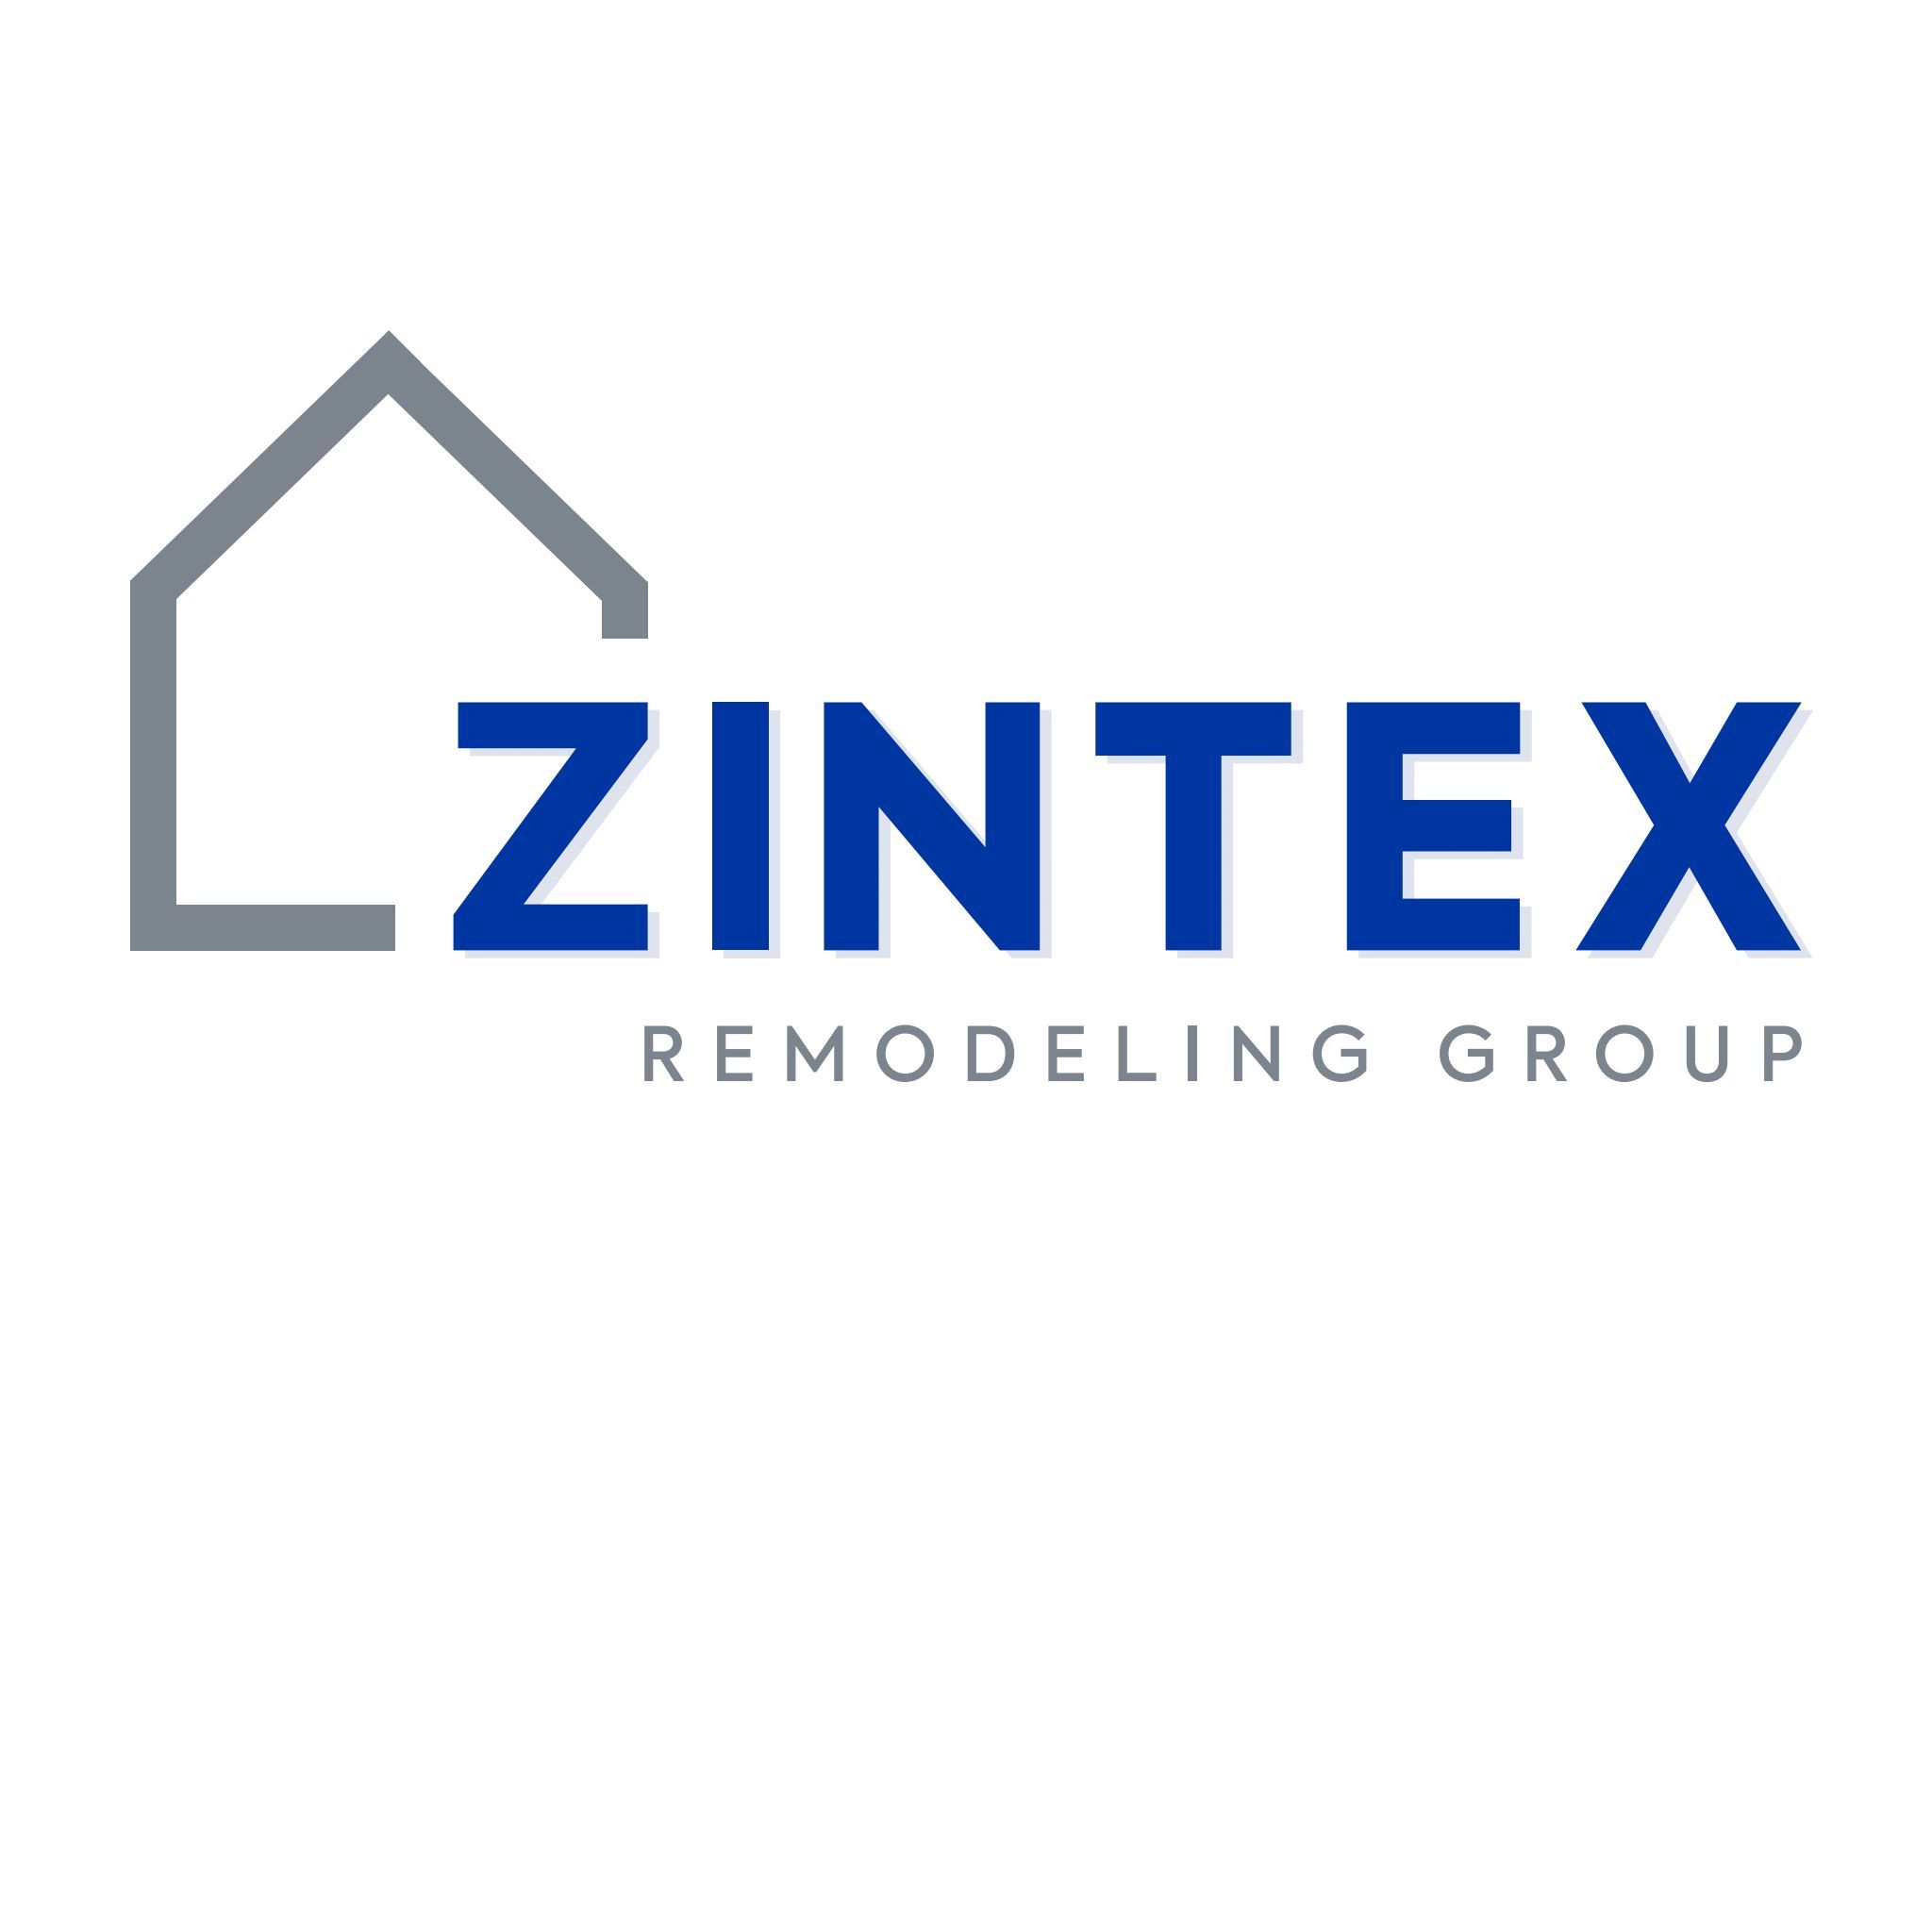 Zintex Remodeling Group - Midland/Odessa Logo